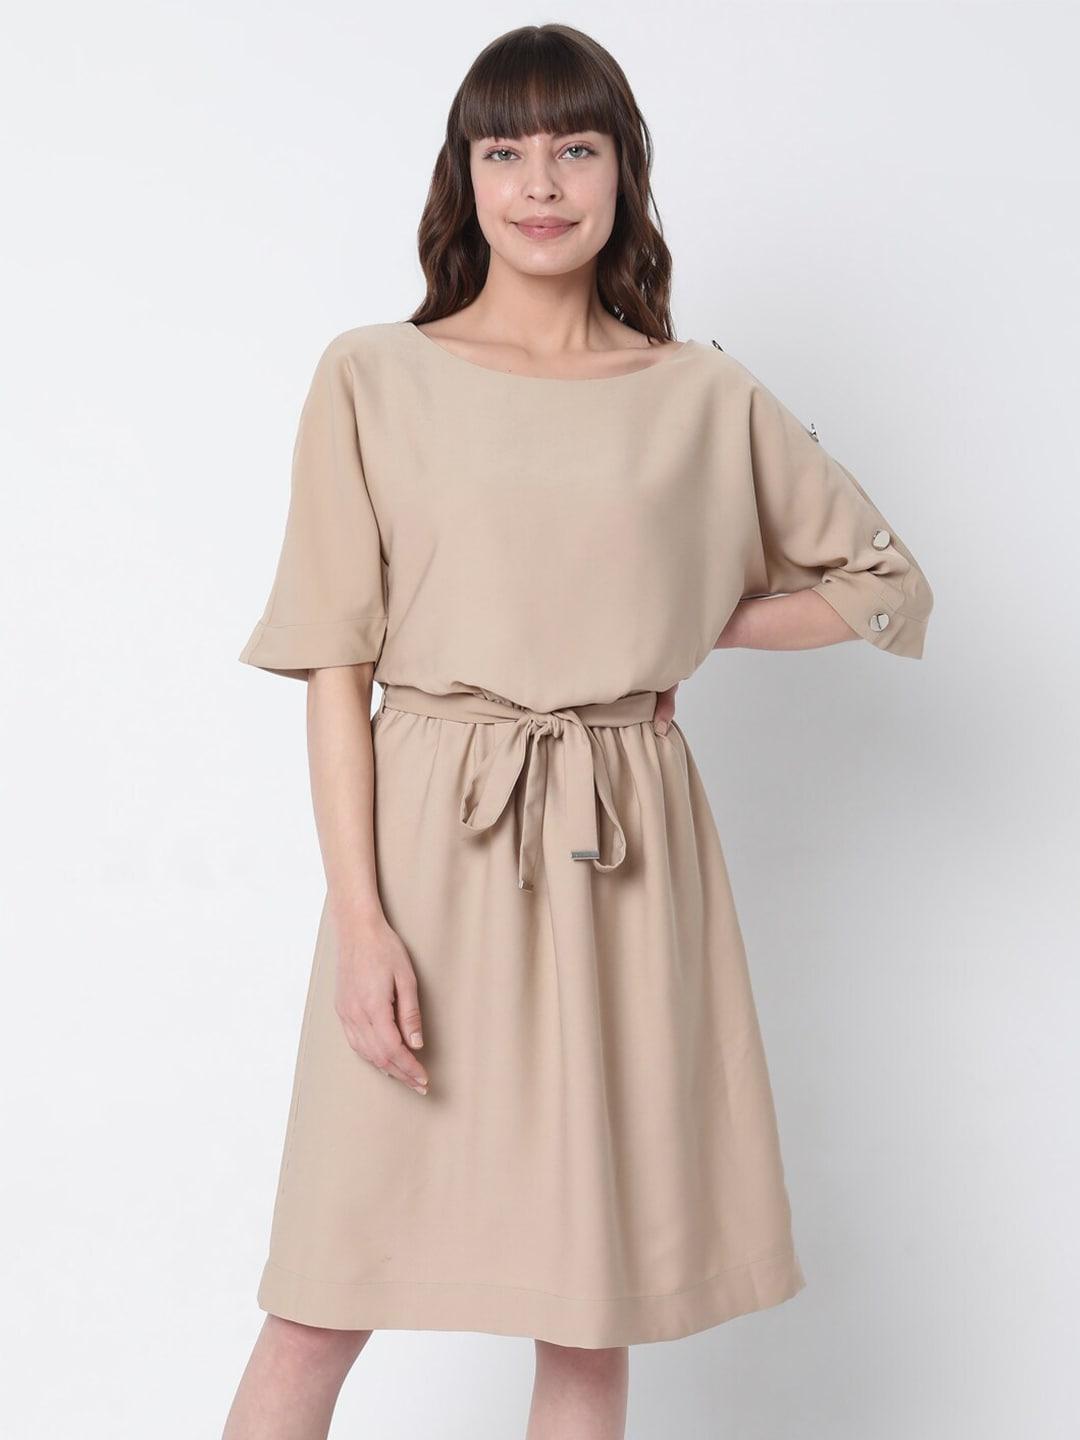 vero moda tan brown belted dress